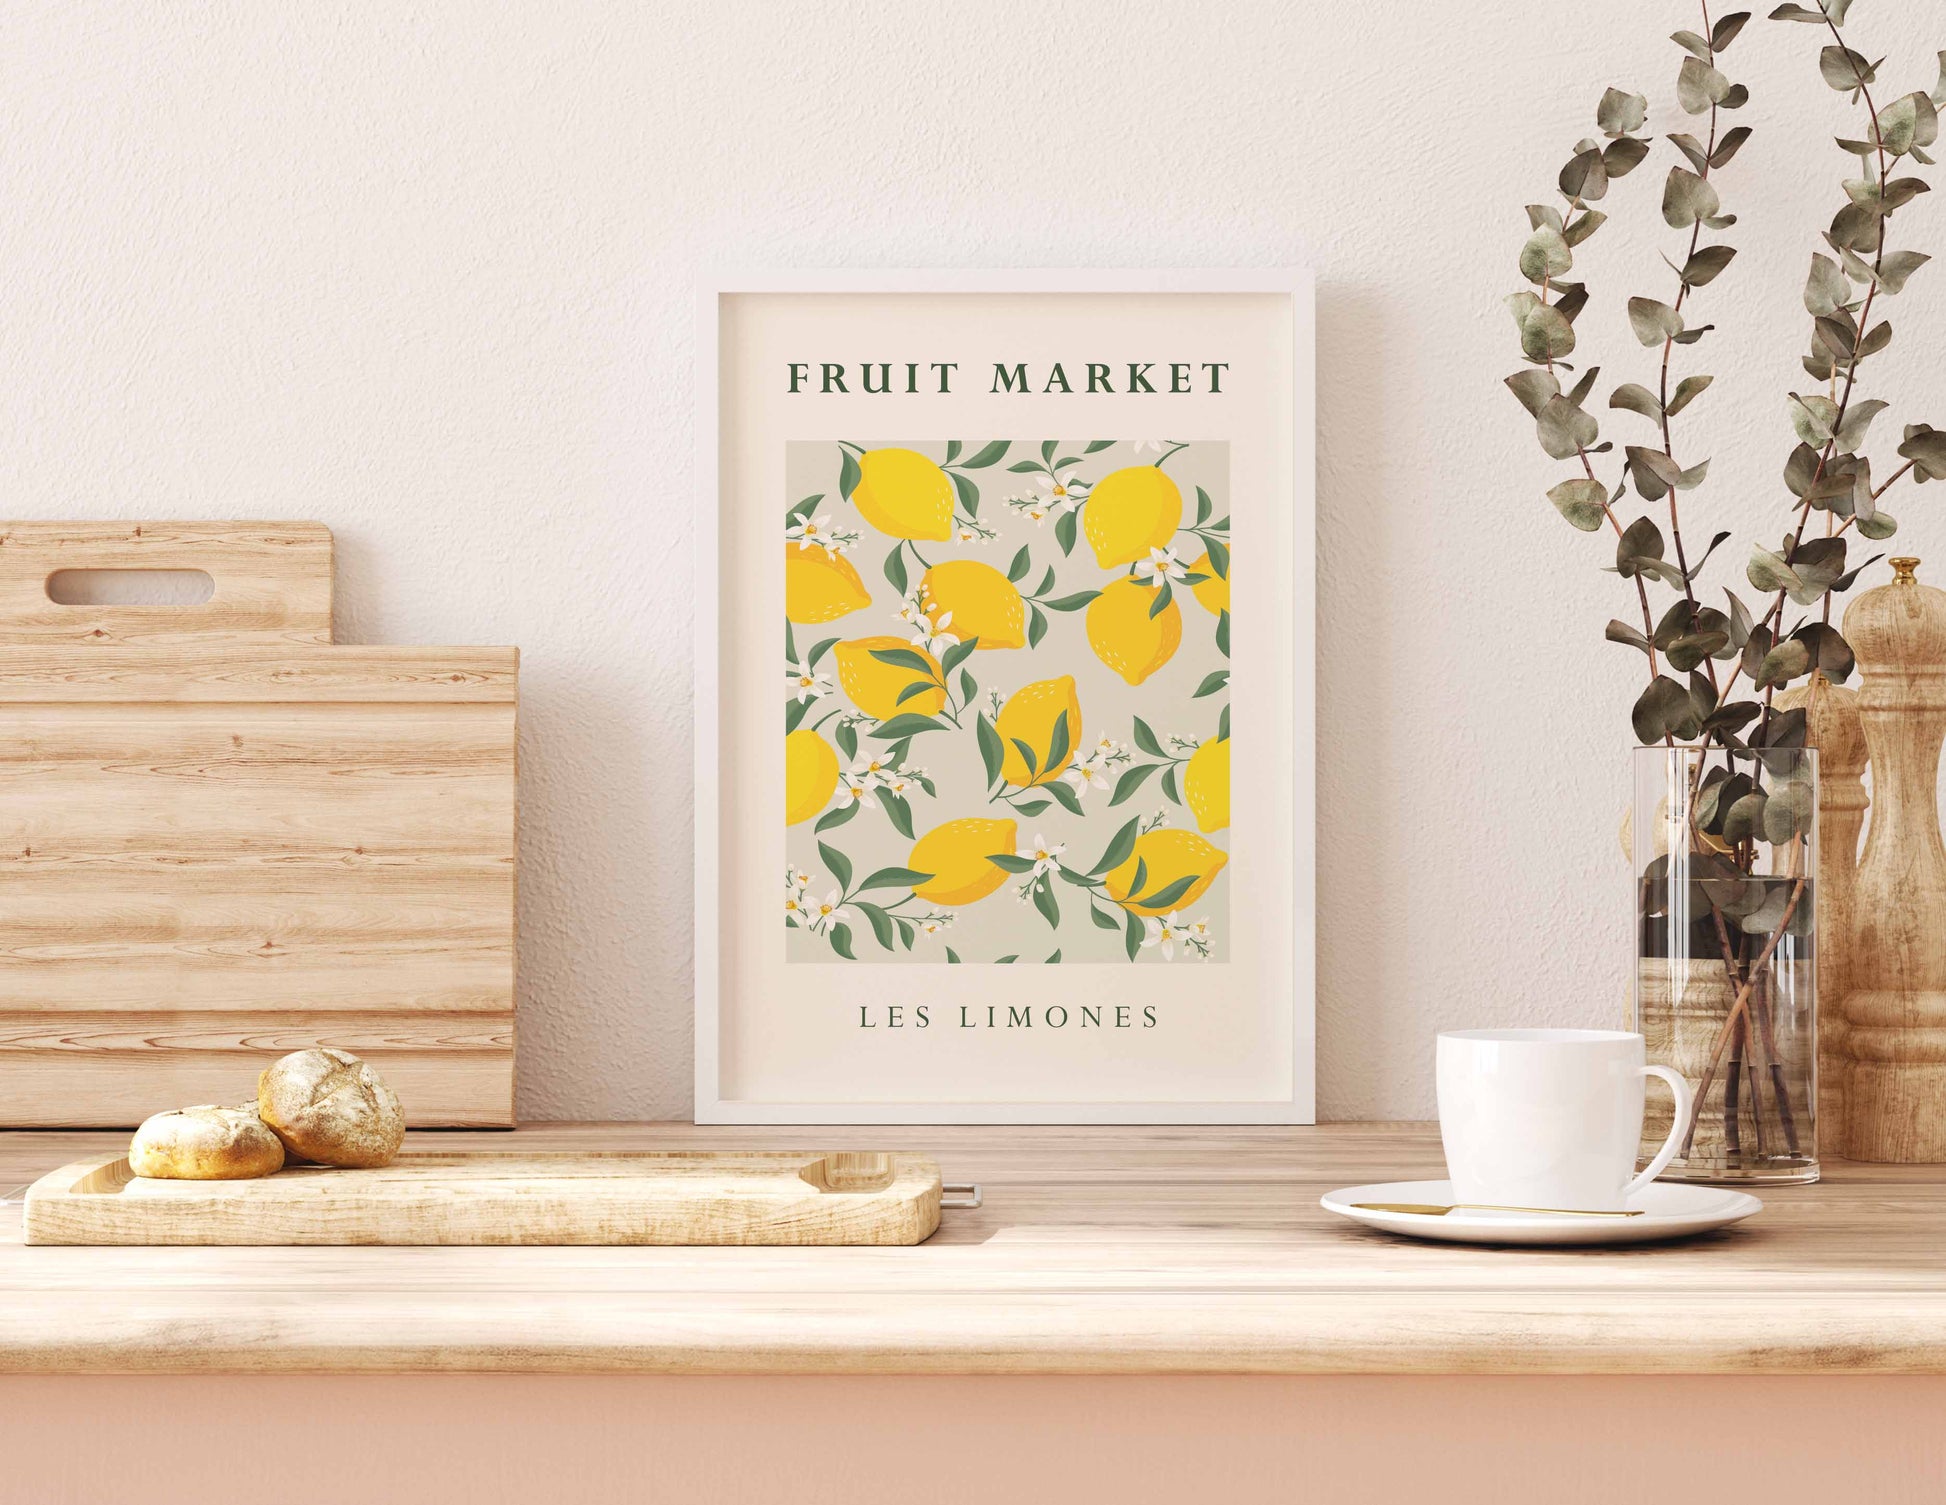 Fruit market kitchen print in yellow